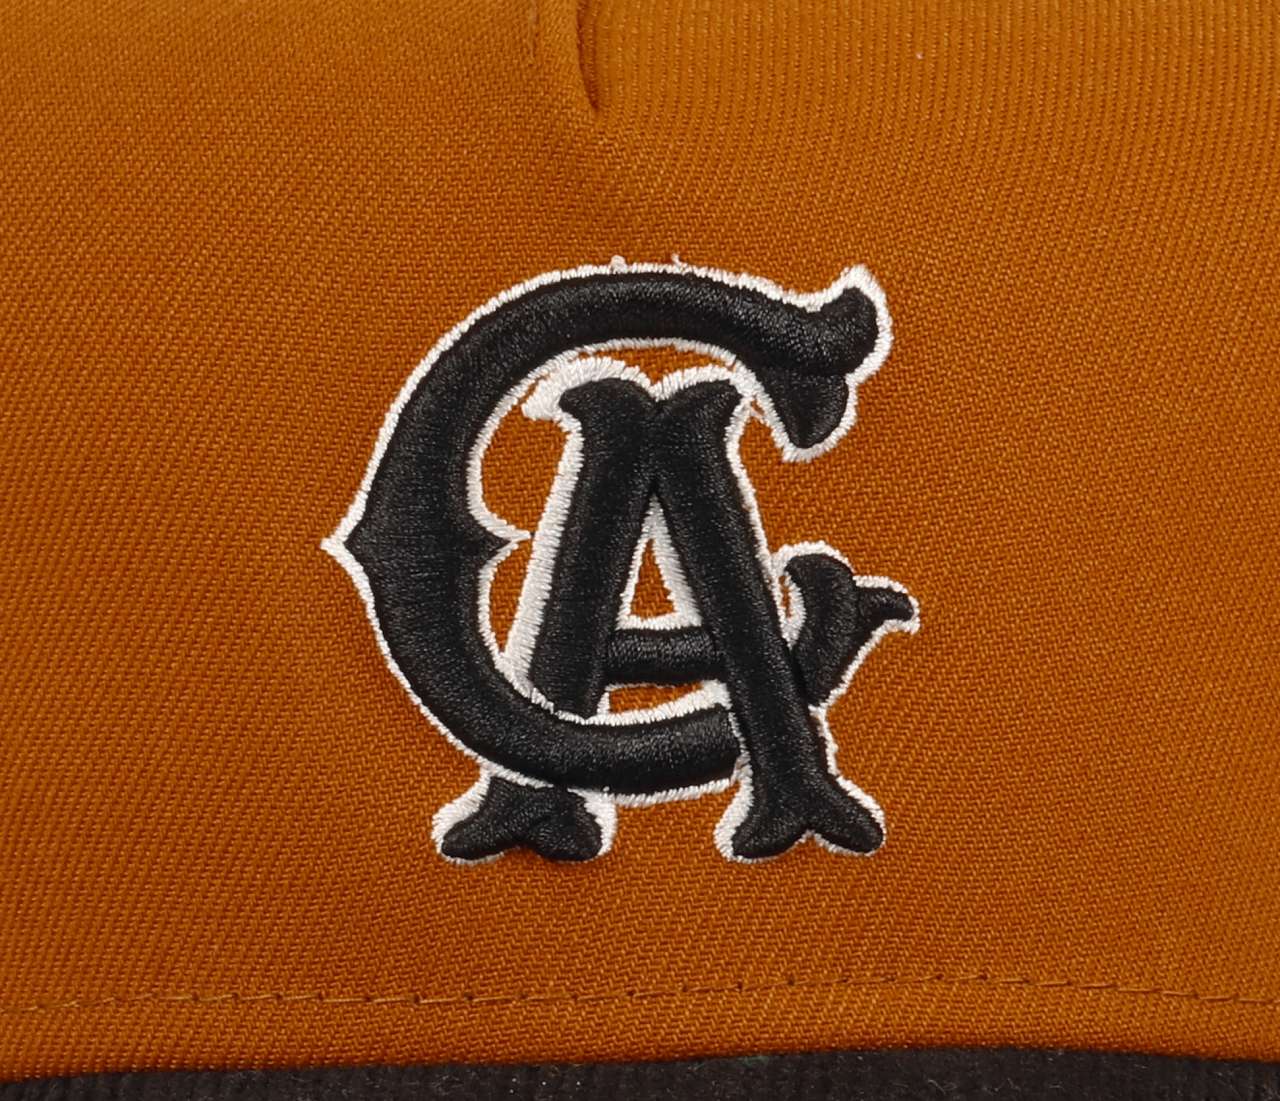 California Angels  MLB All-Star Game 1967 Stadium Sidepatch Orange Black Cord 9Forty A-Frame Snapback Cap New Era